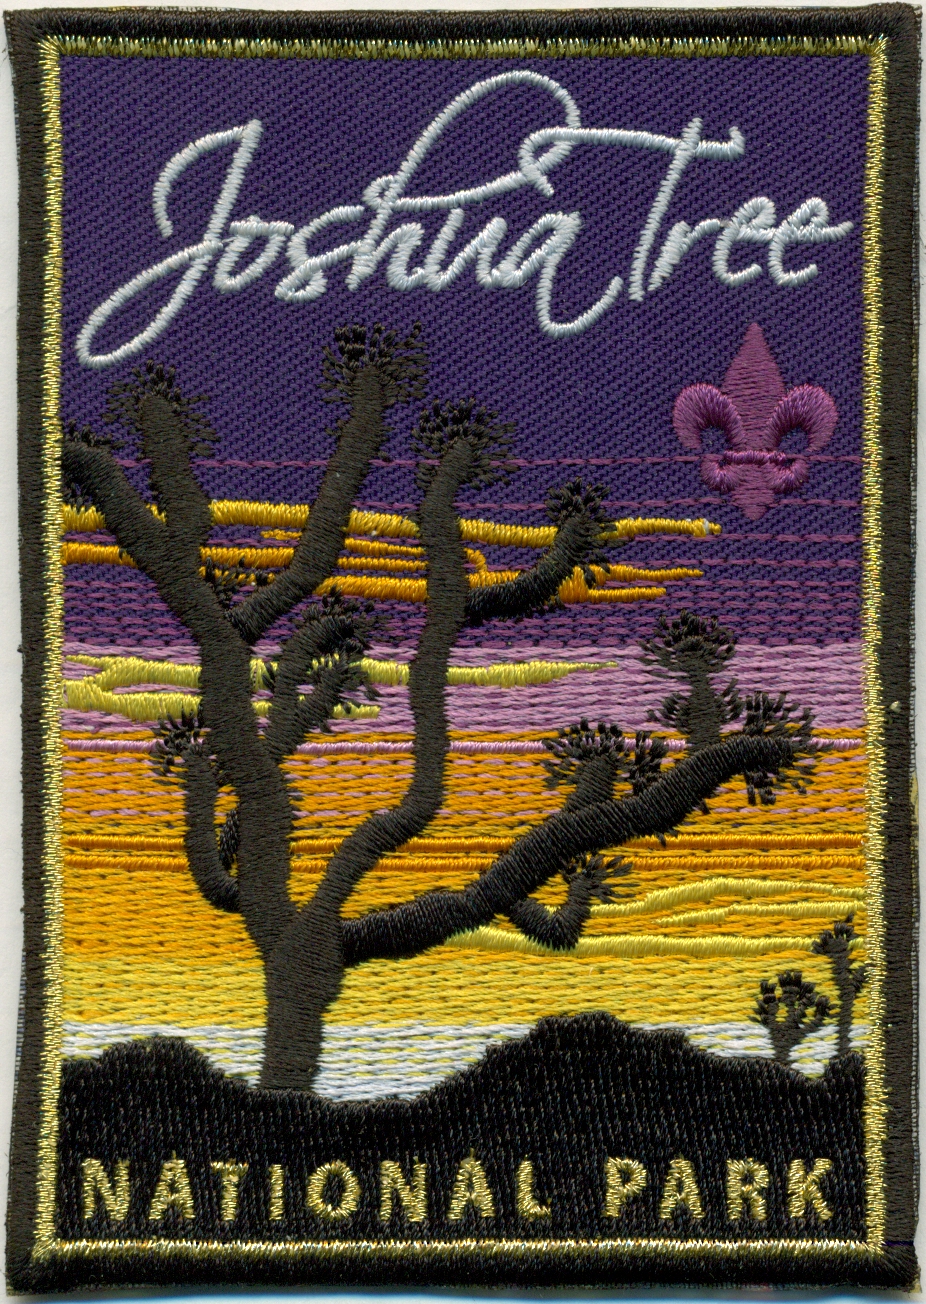 Joshua Tree National Park emblem image